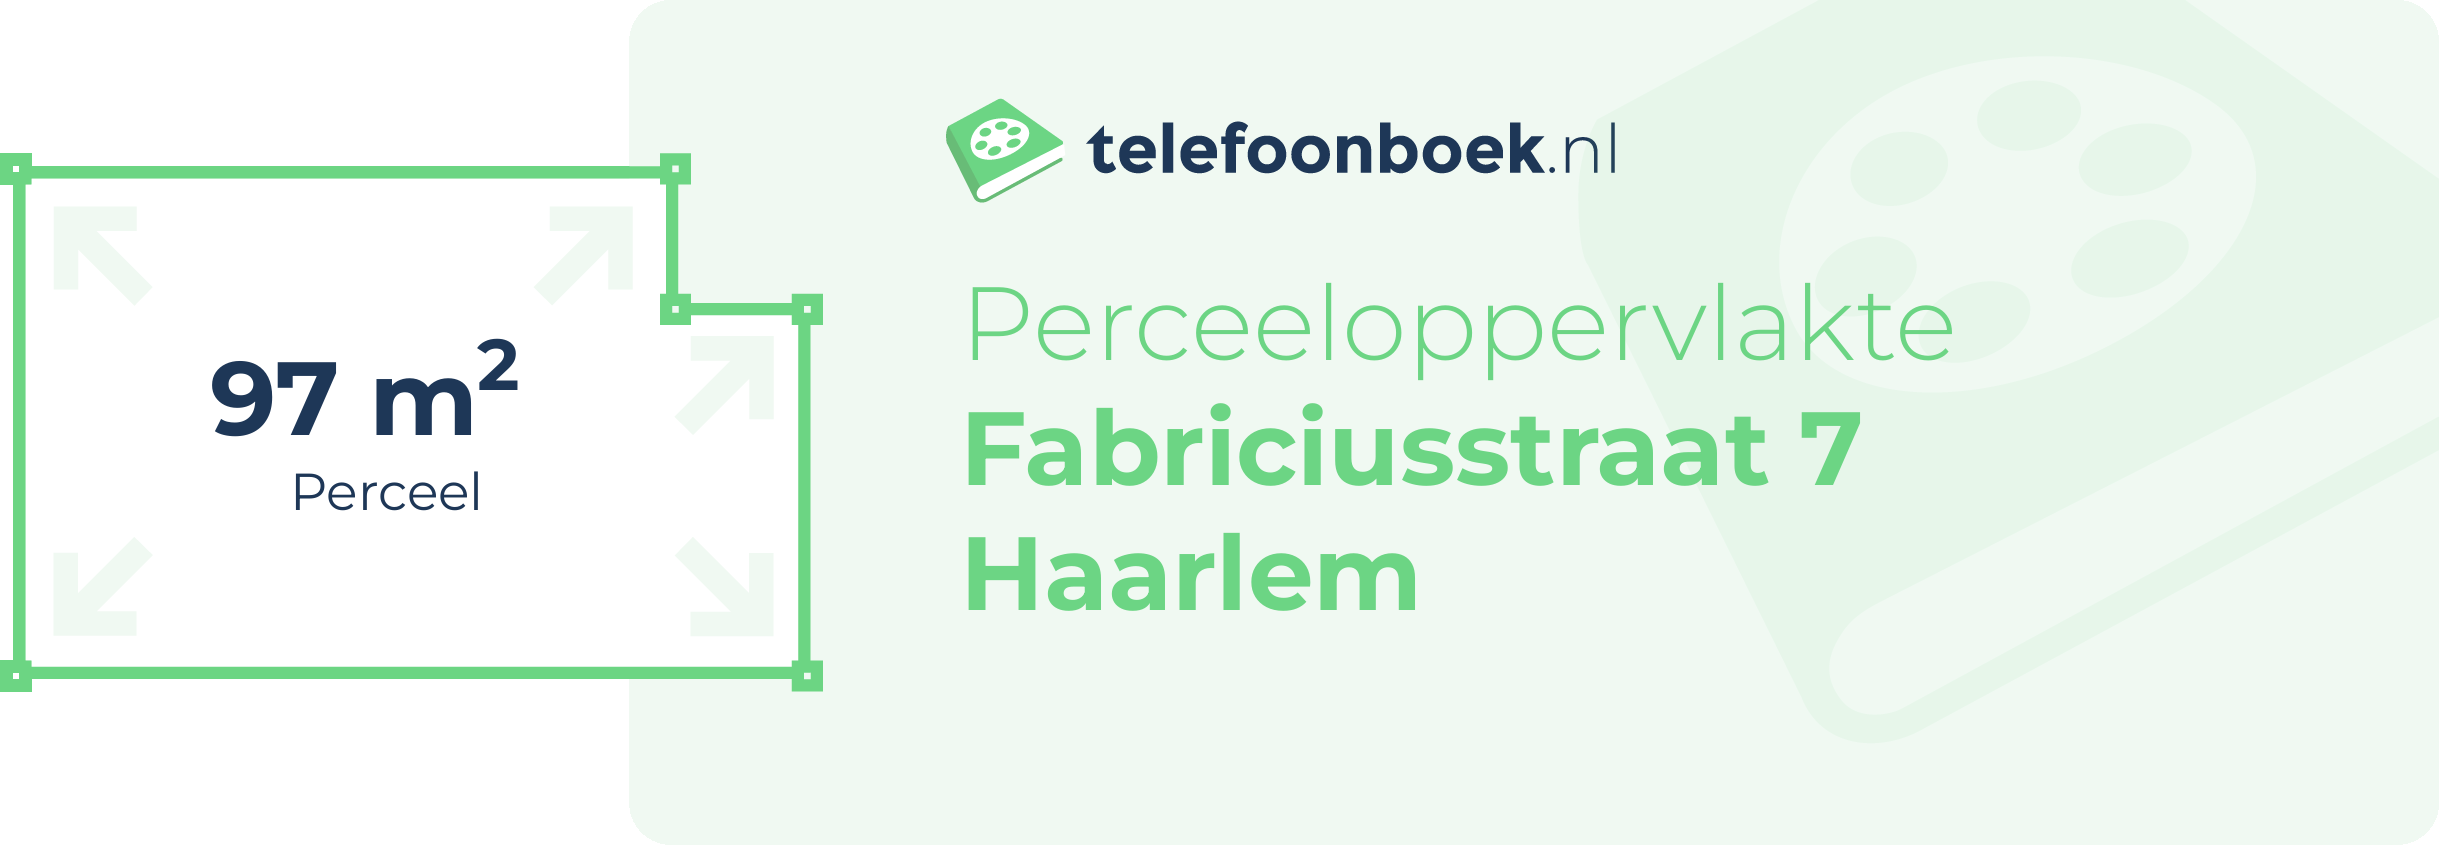 Perceeloppervlakte Fabriciusstraat 7 Haarlem